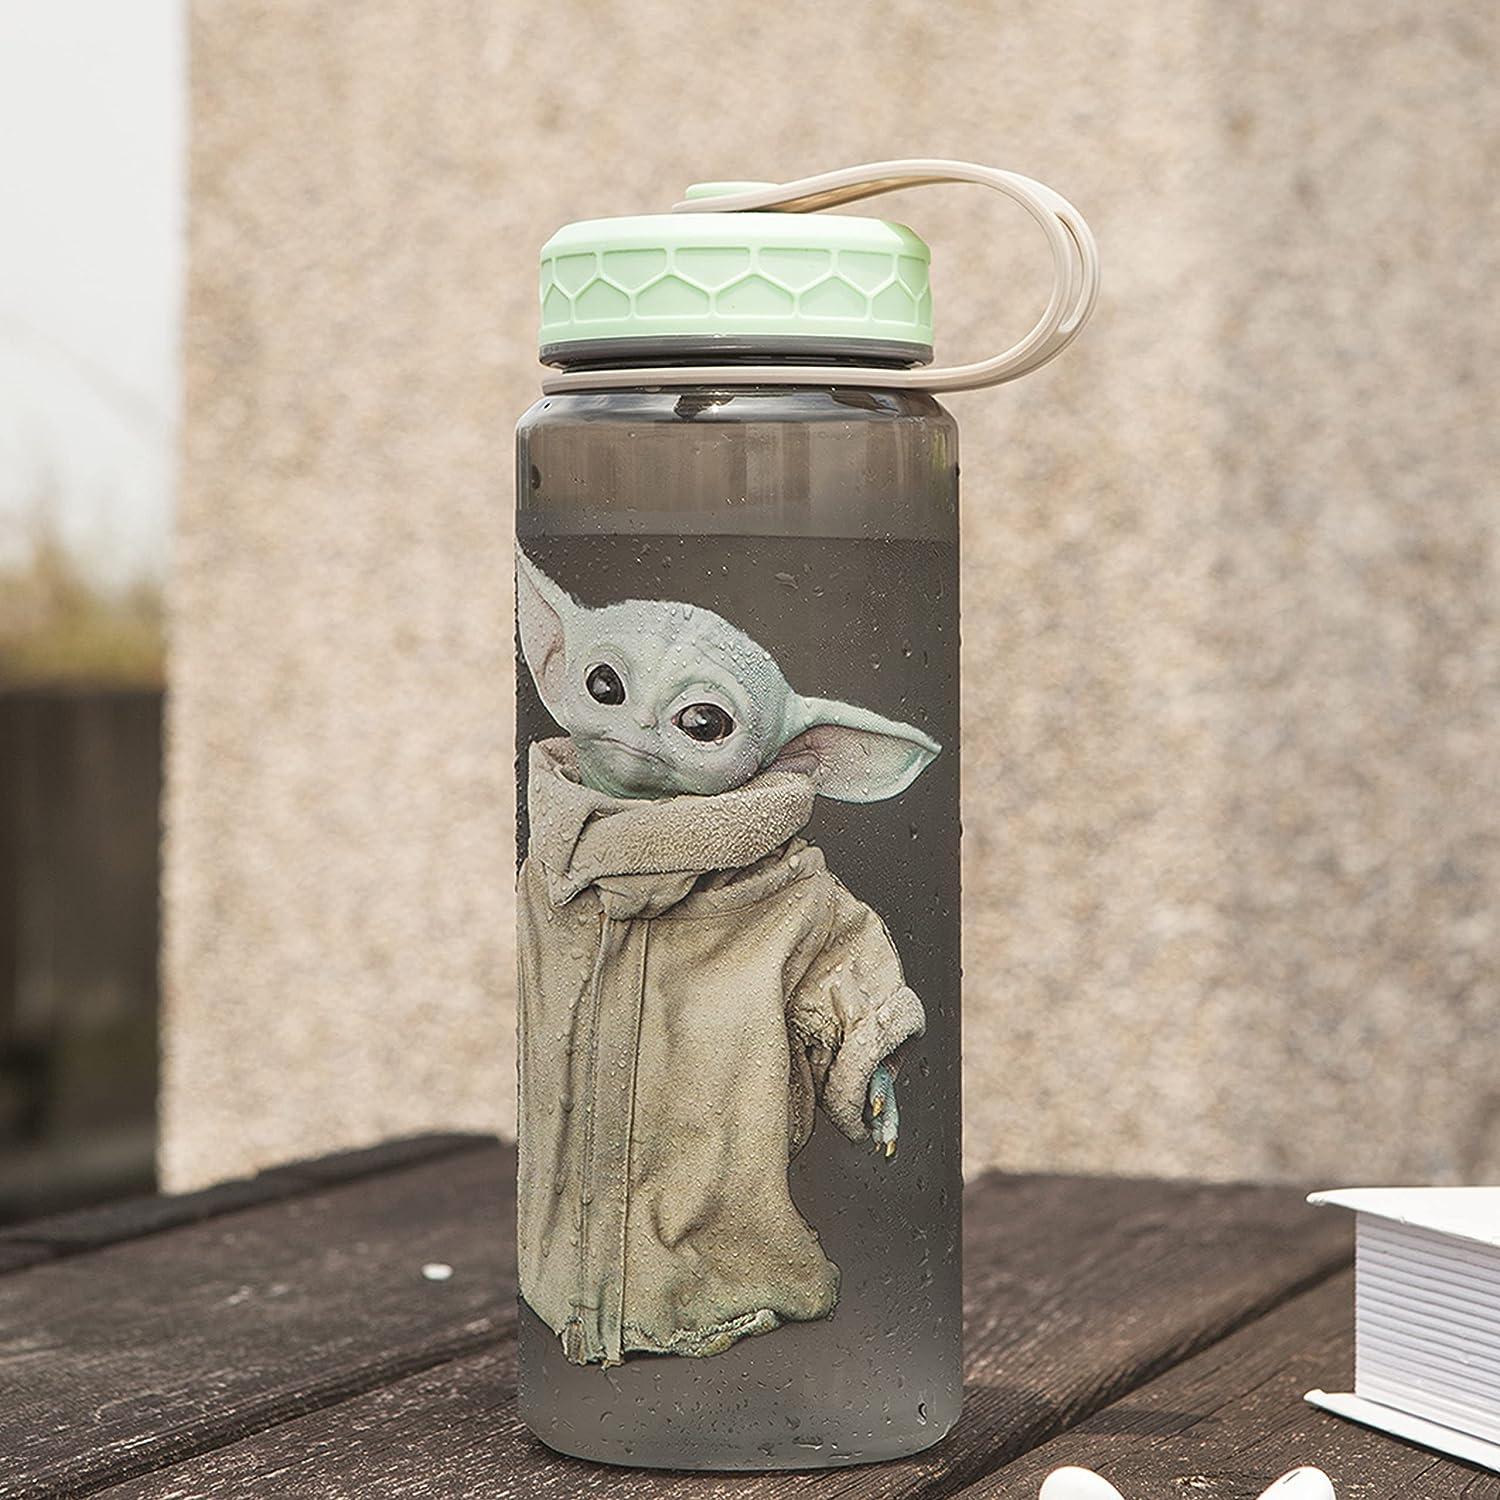 Star Wars The Mandalorian The Child Grogu Water Bottle